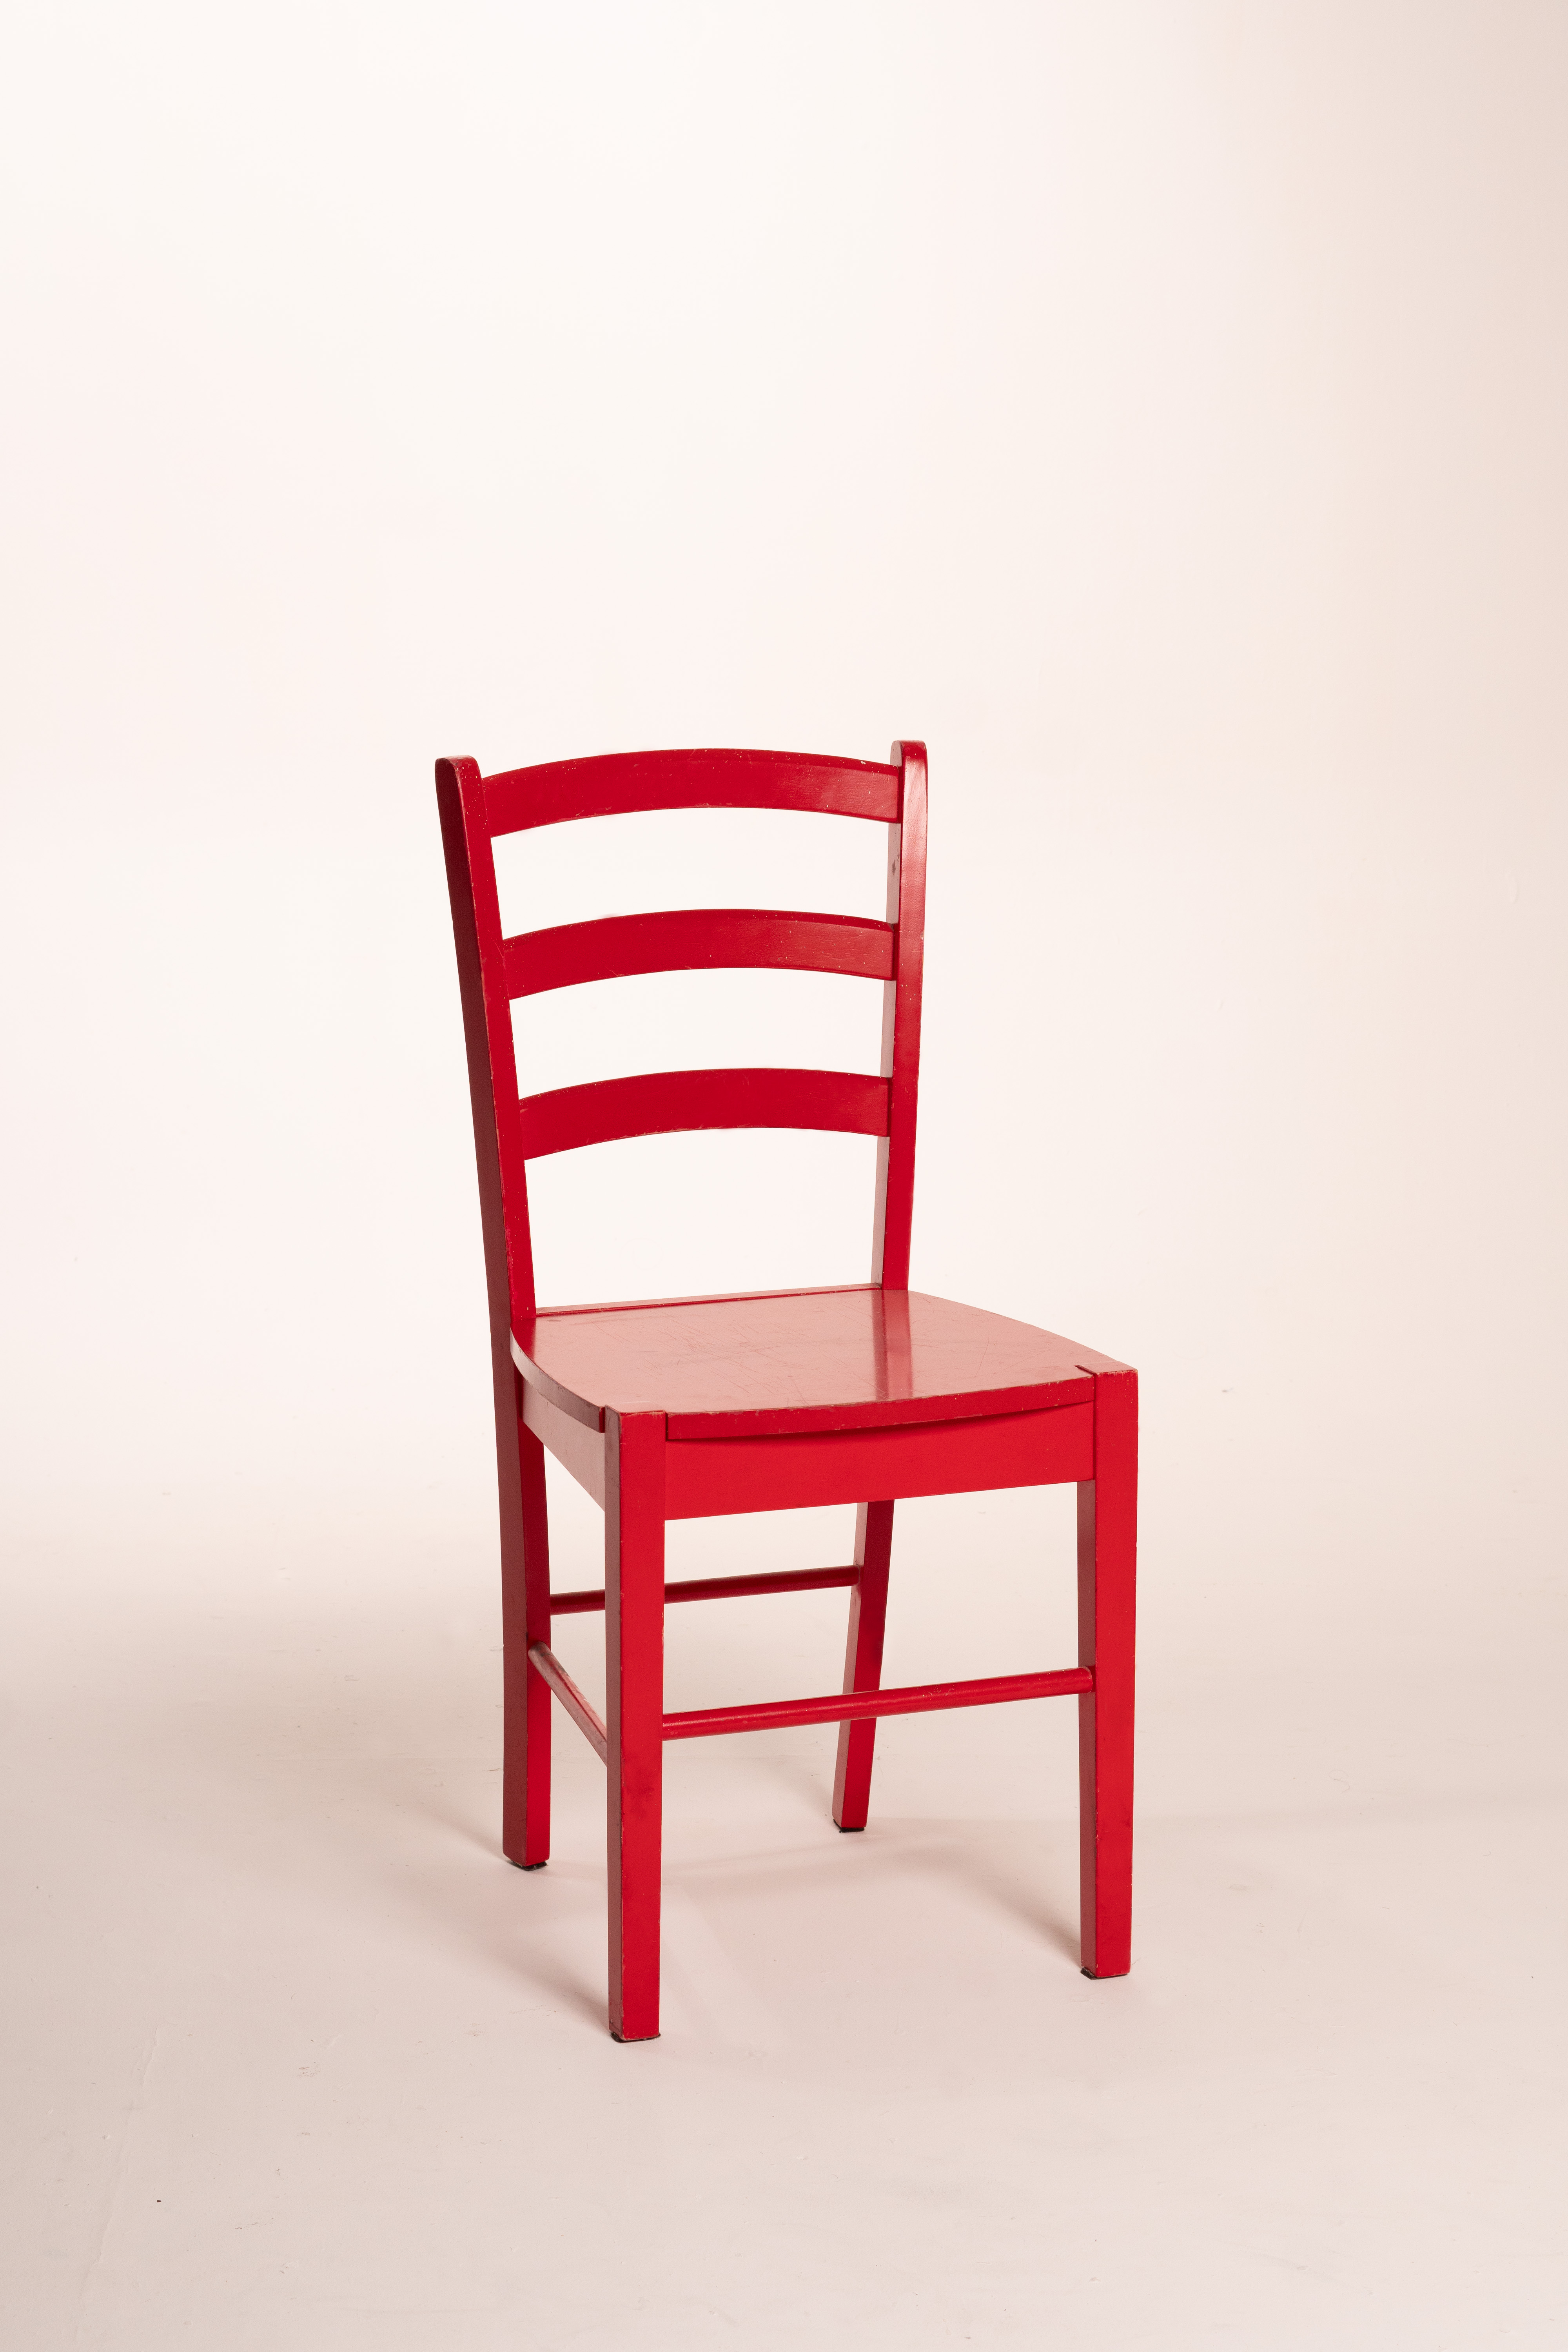 renta mobiliario, silla alquiler,silla roja bogotá